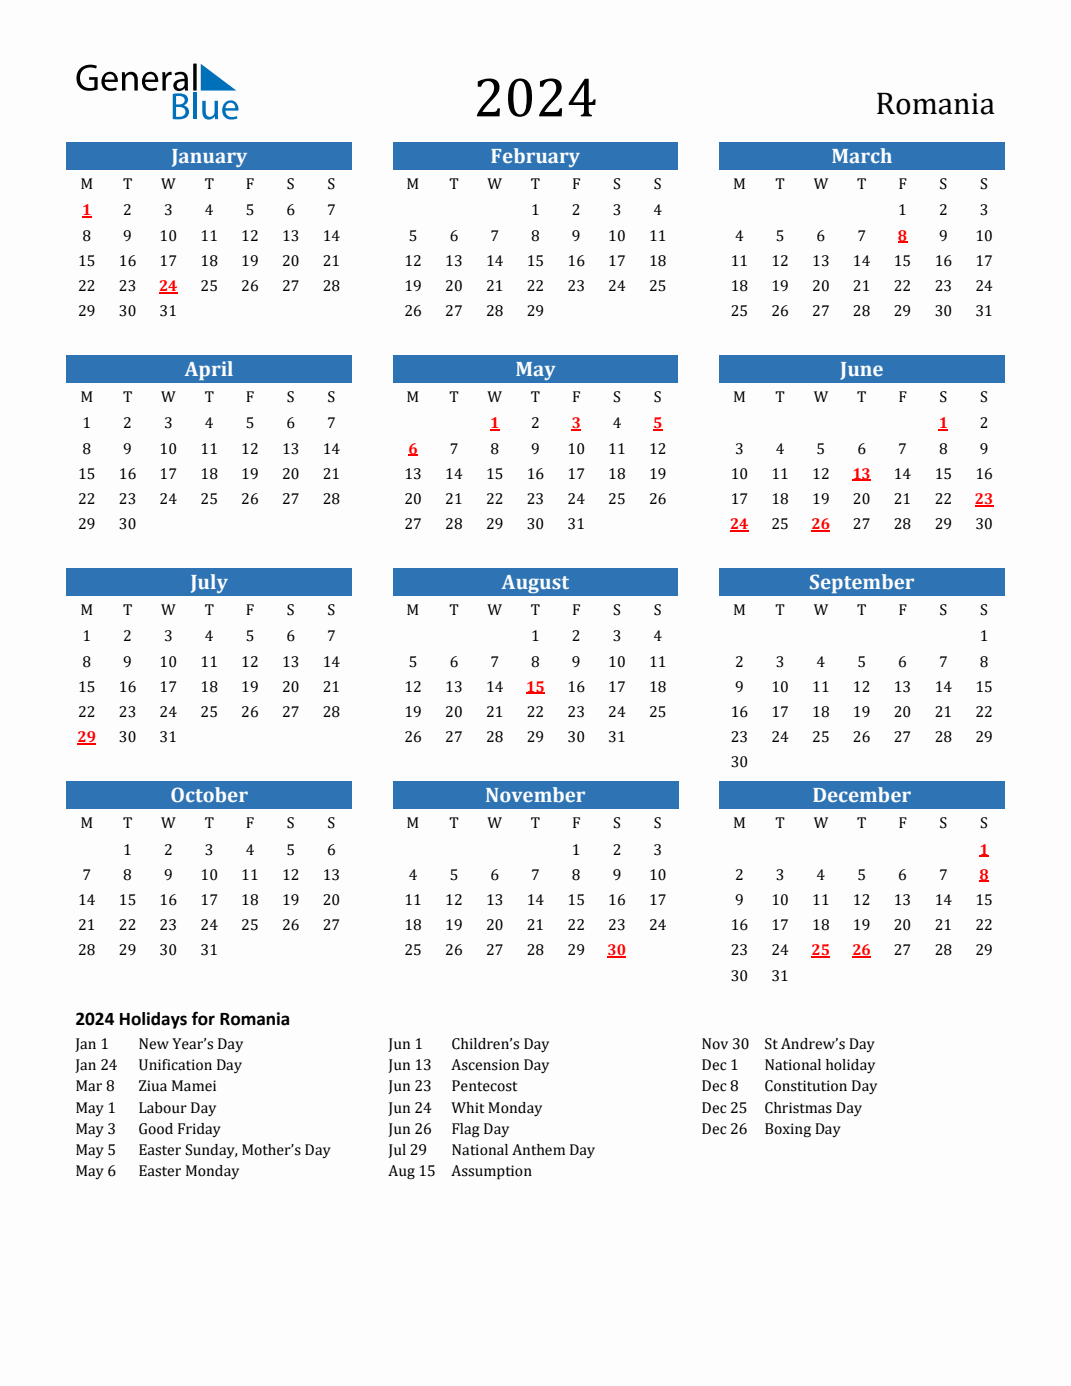 2024 Holiday Calendar for Romania Monday Start